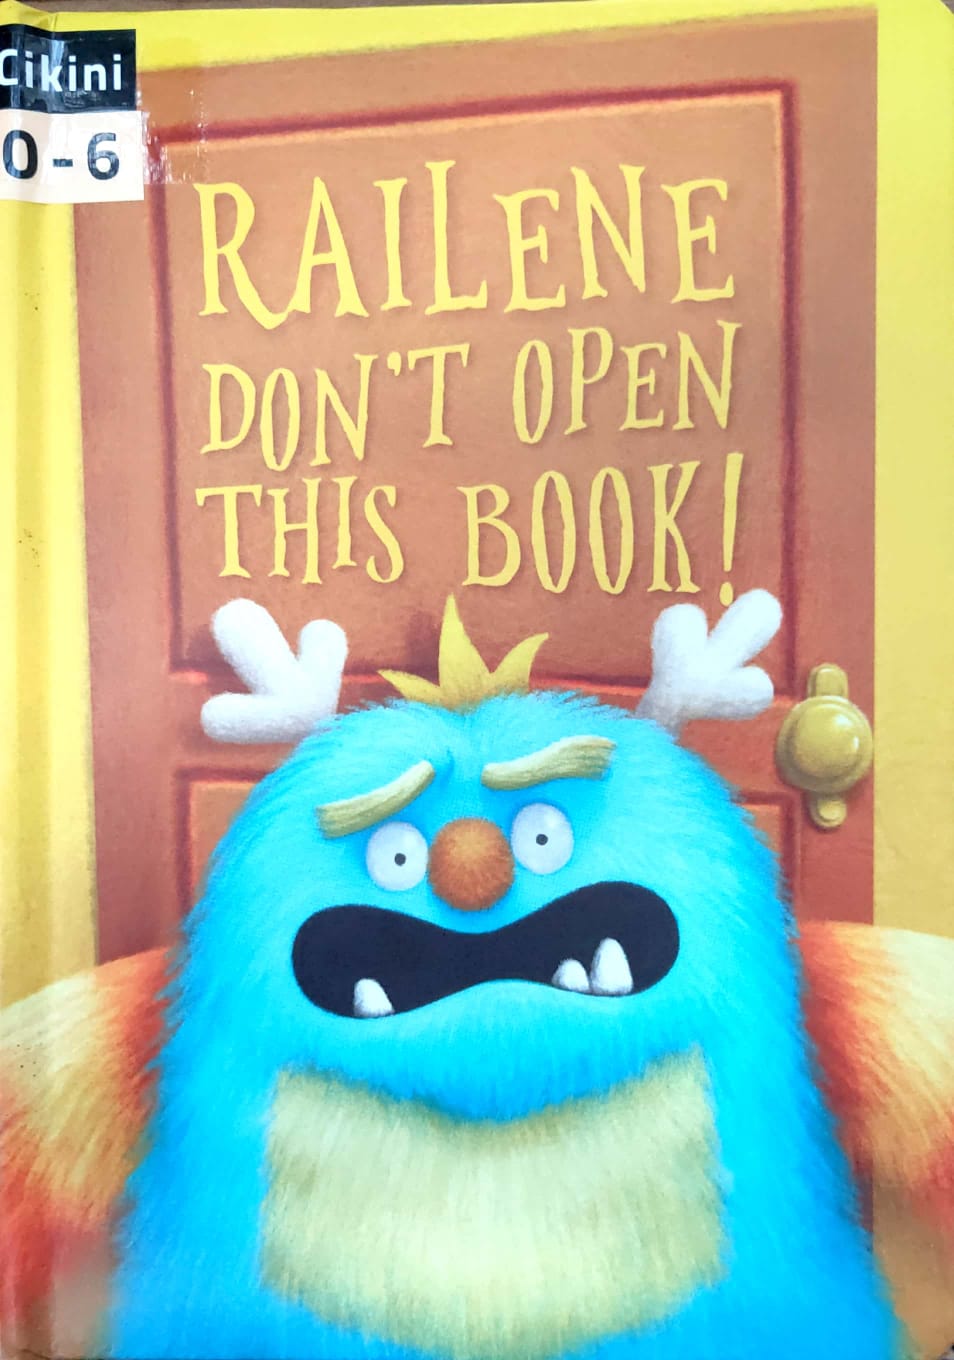 Railene don't open this book